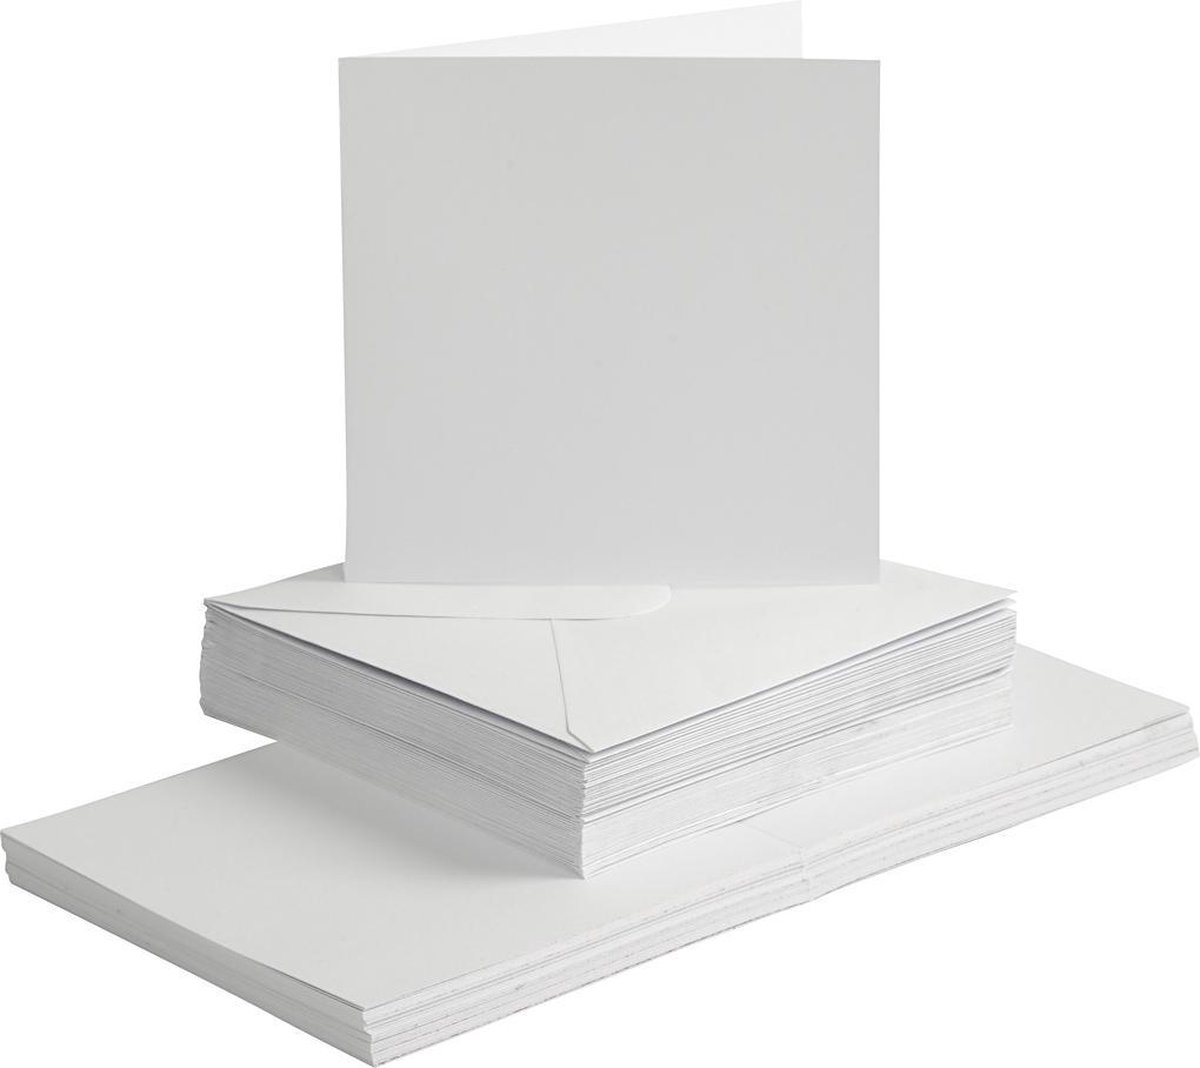 Kaarten en enveloppen, afmeting kaart 15x15 cm, afmeting envelop 16x16 cm, 50 sets, wit - Creotime